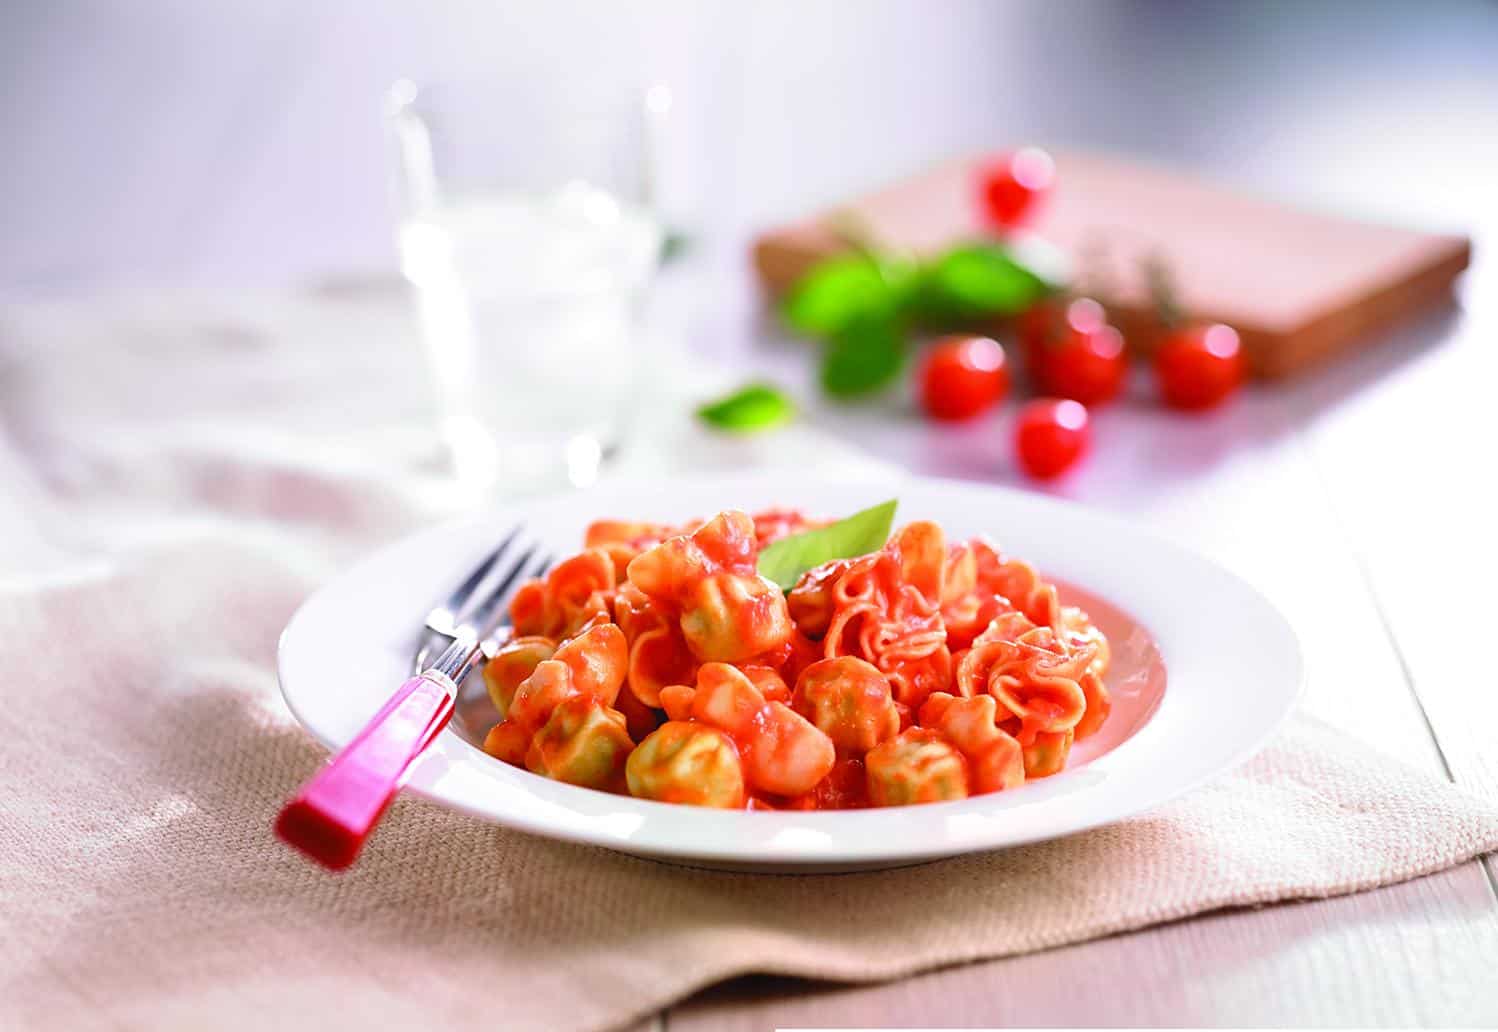 Saccottini Stuffed With Pesto and Served With Primavera Sauce